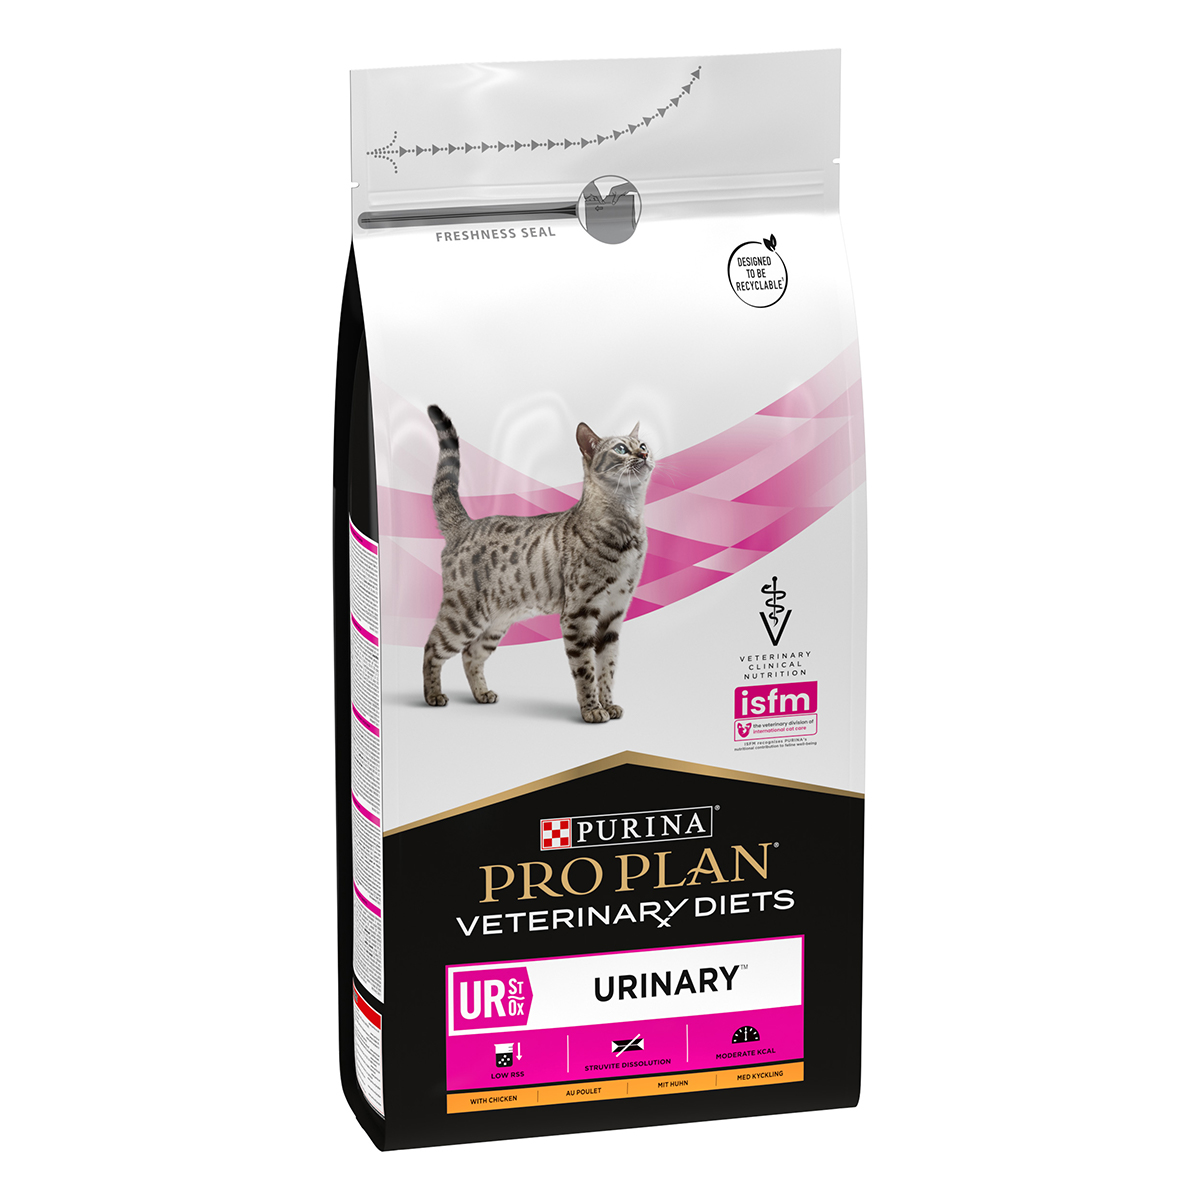 Purina PRO PLAN Veterinary Diets UR St/Ox Urinary Katze 